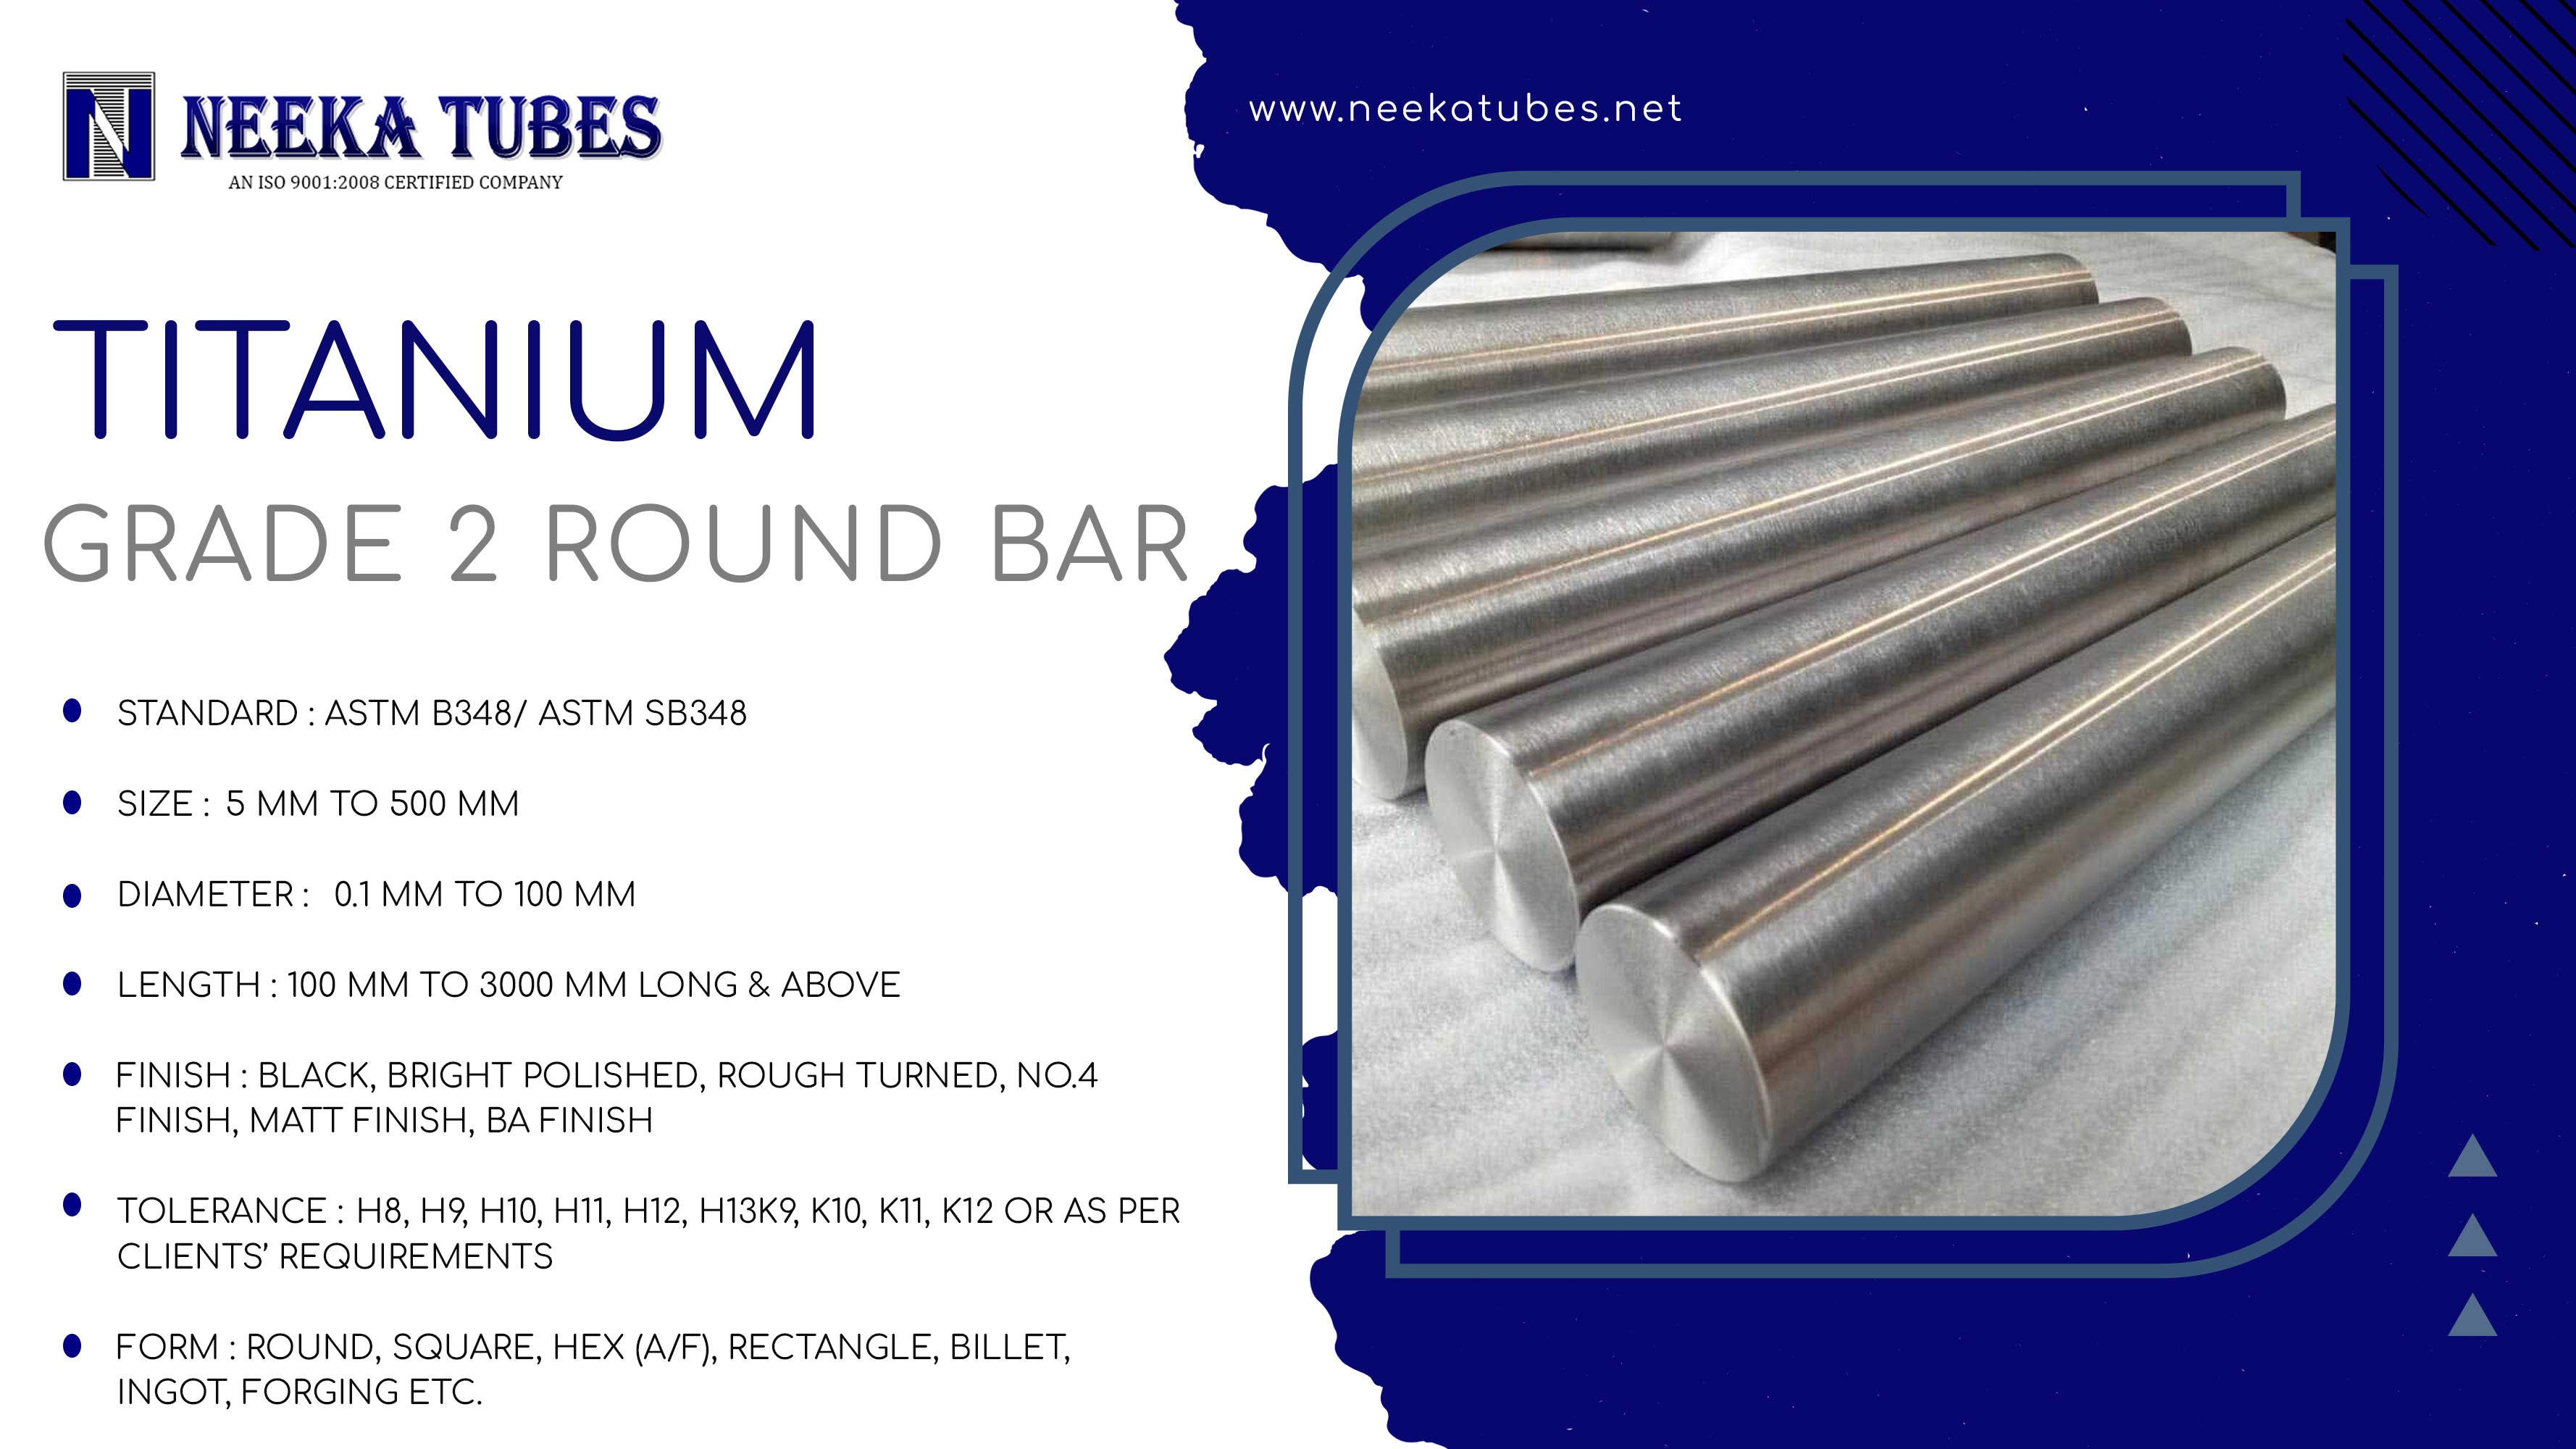 Tittanium grade 2 round bar specification